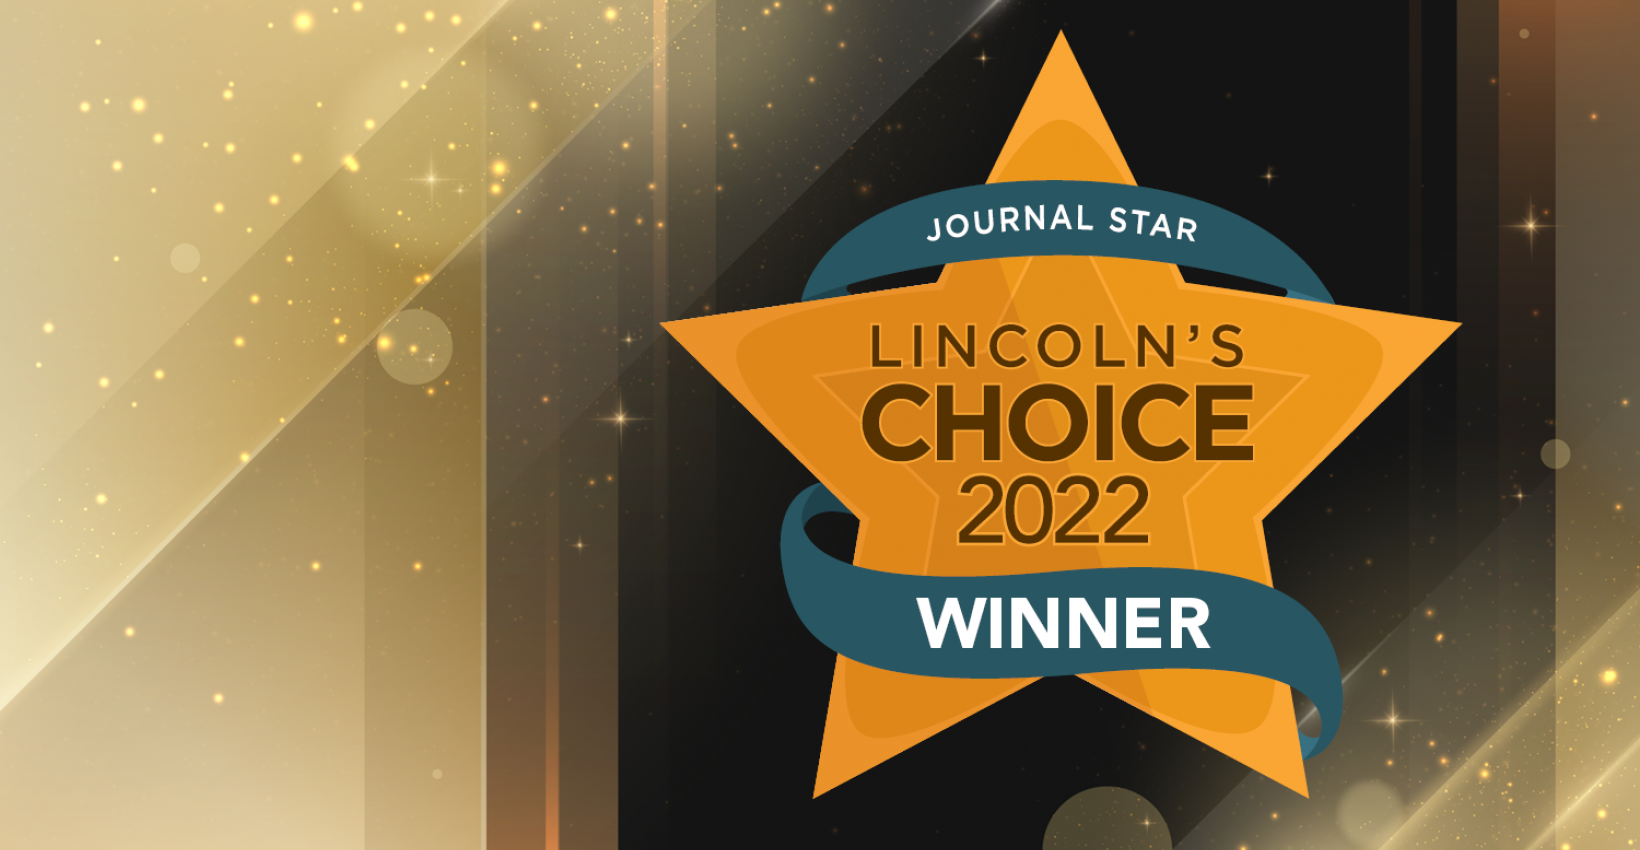 Lincoln's Choice Awards 2022 Winner